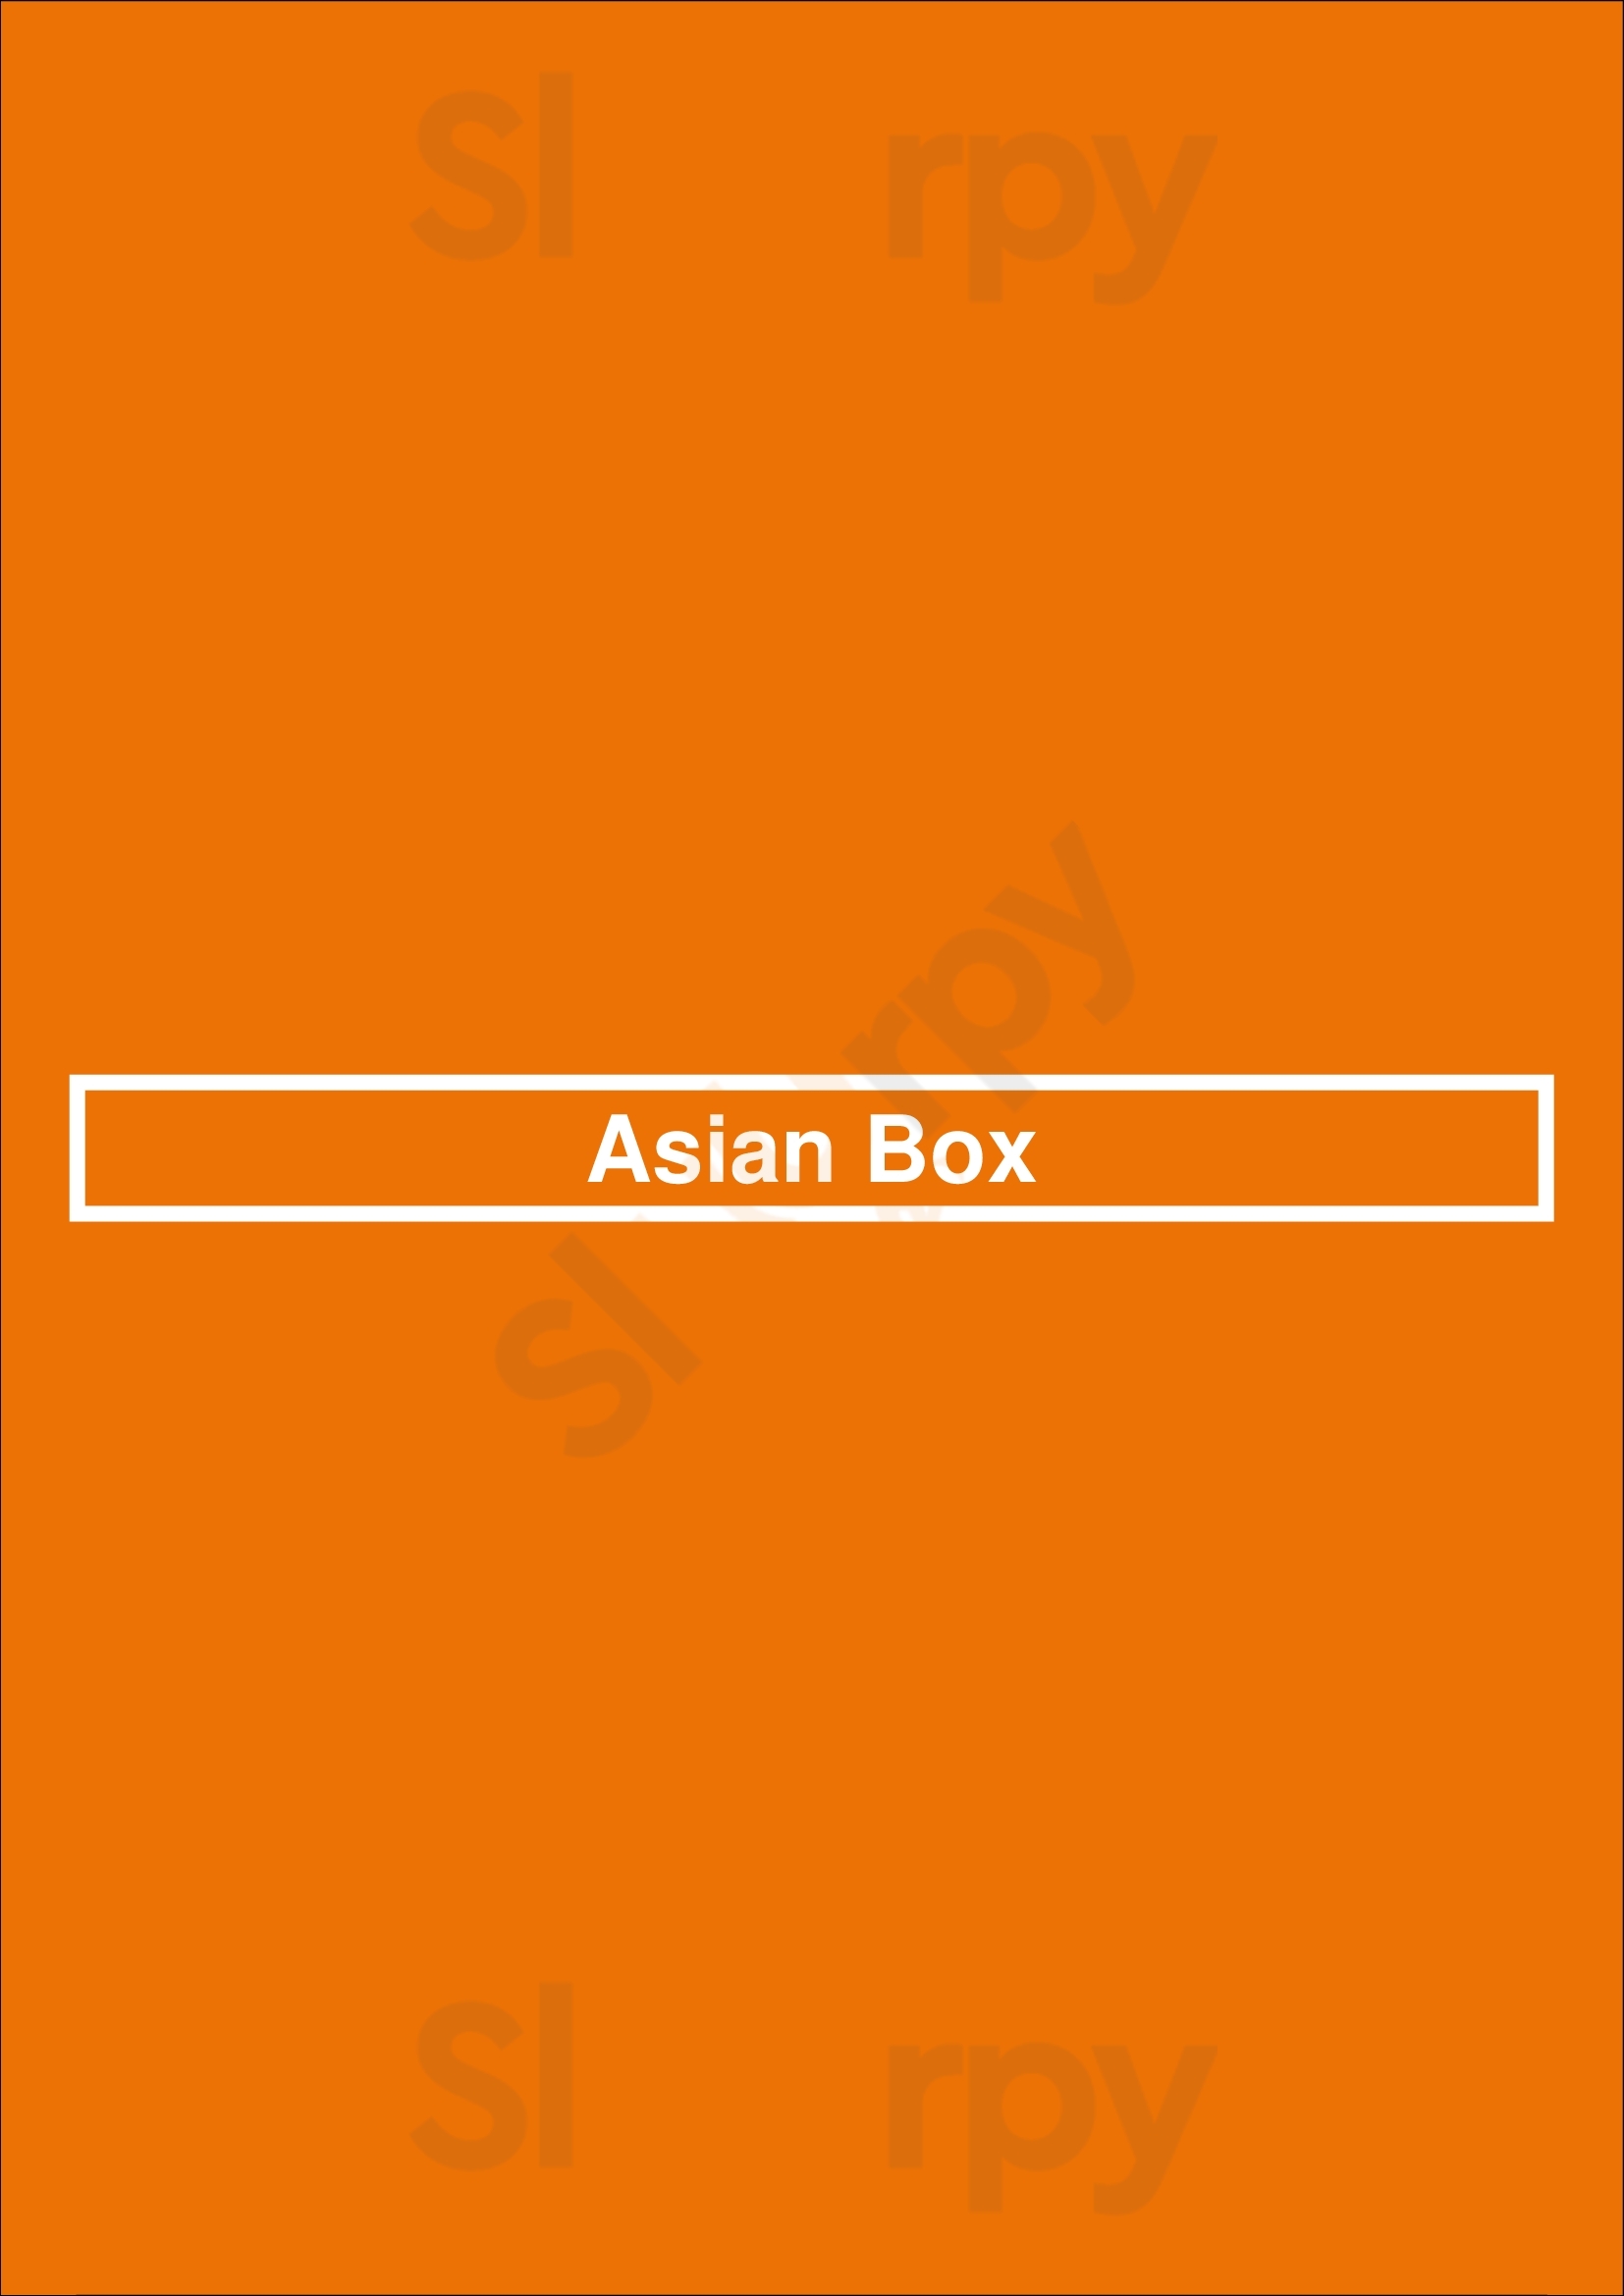 Asian Box San Francisco Menu - 1